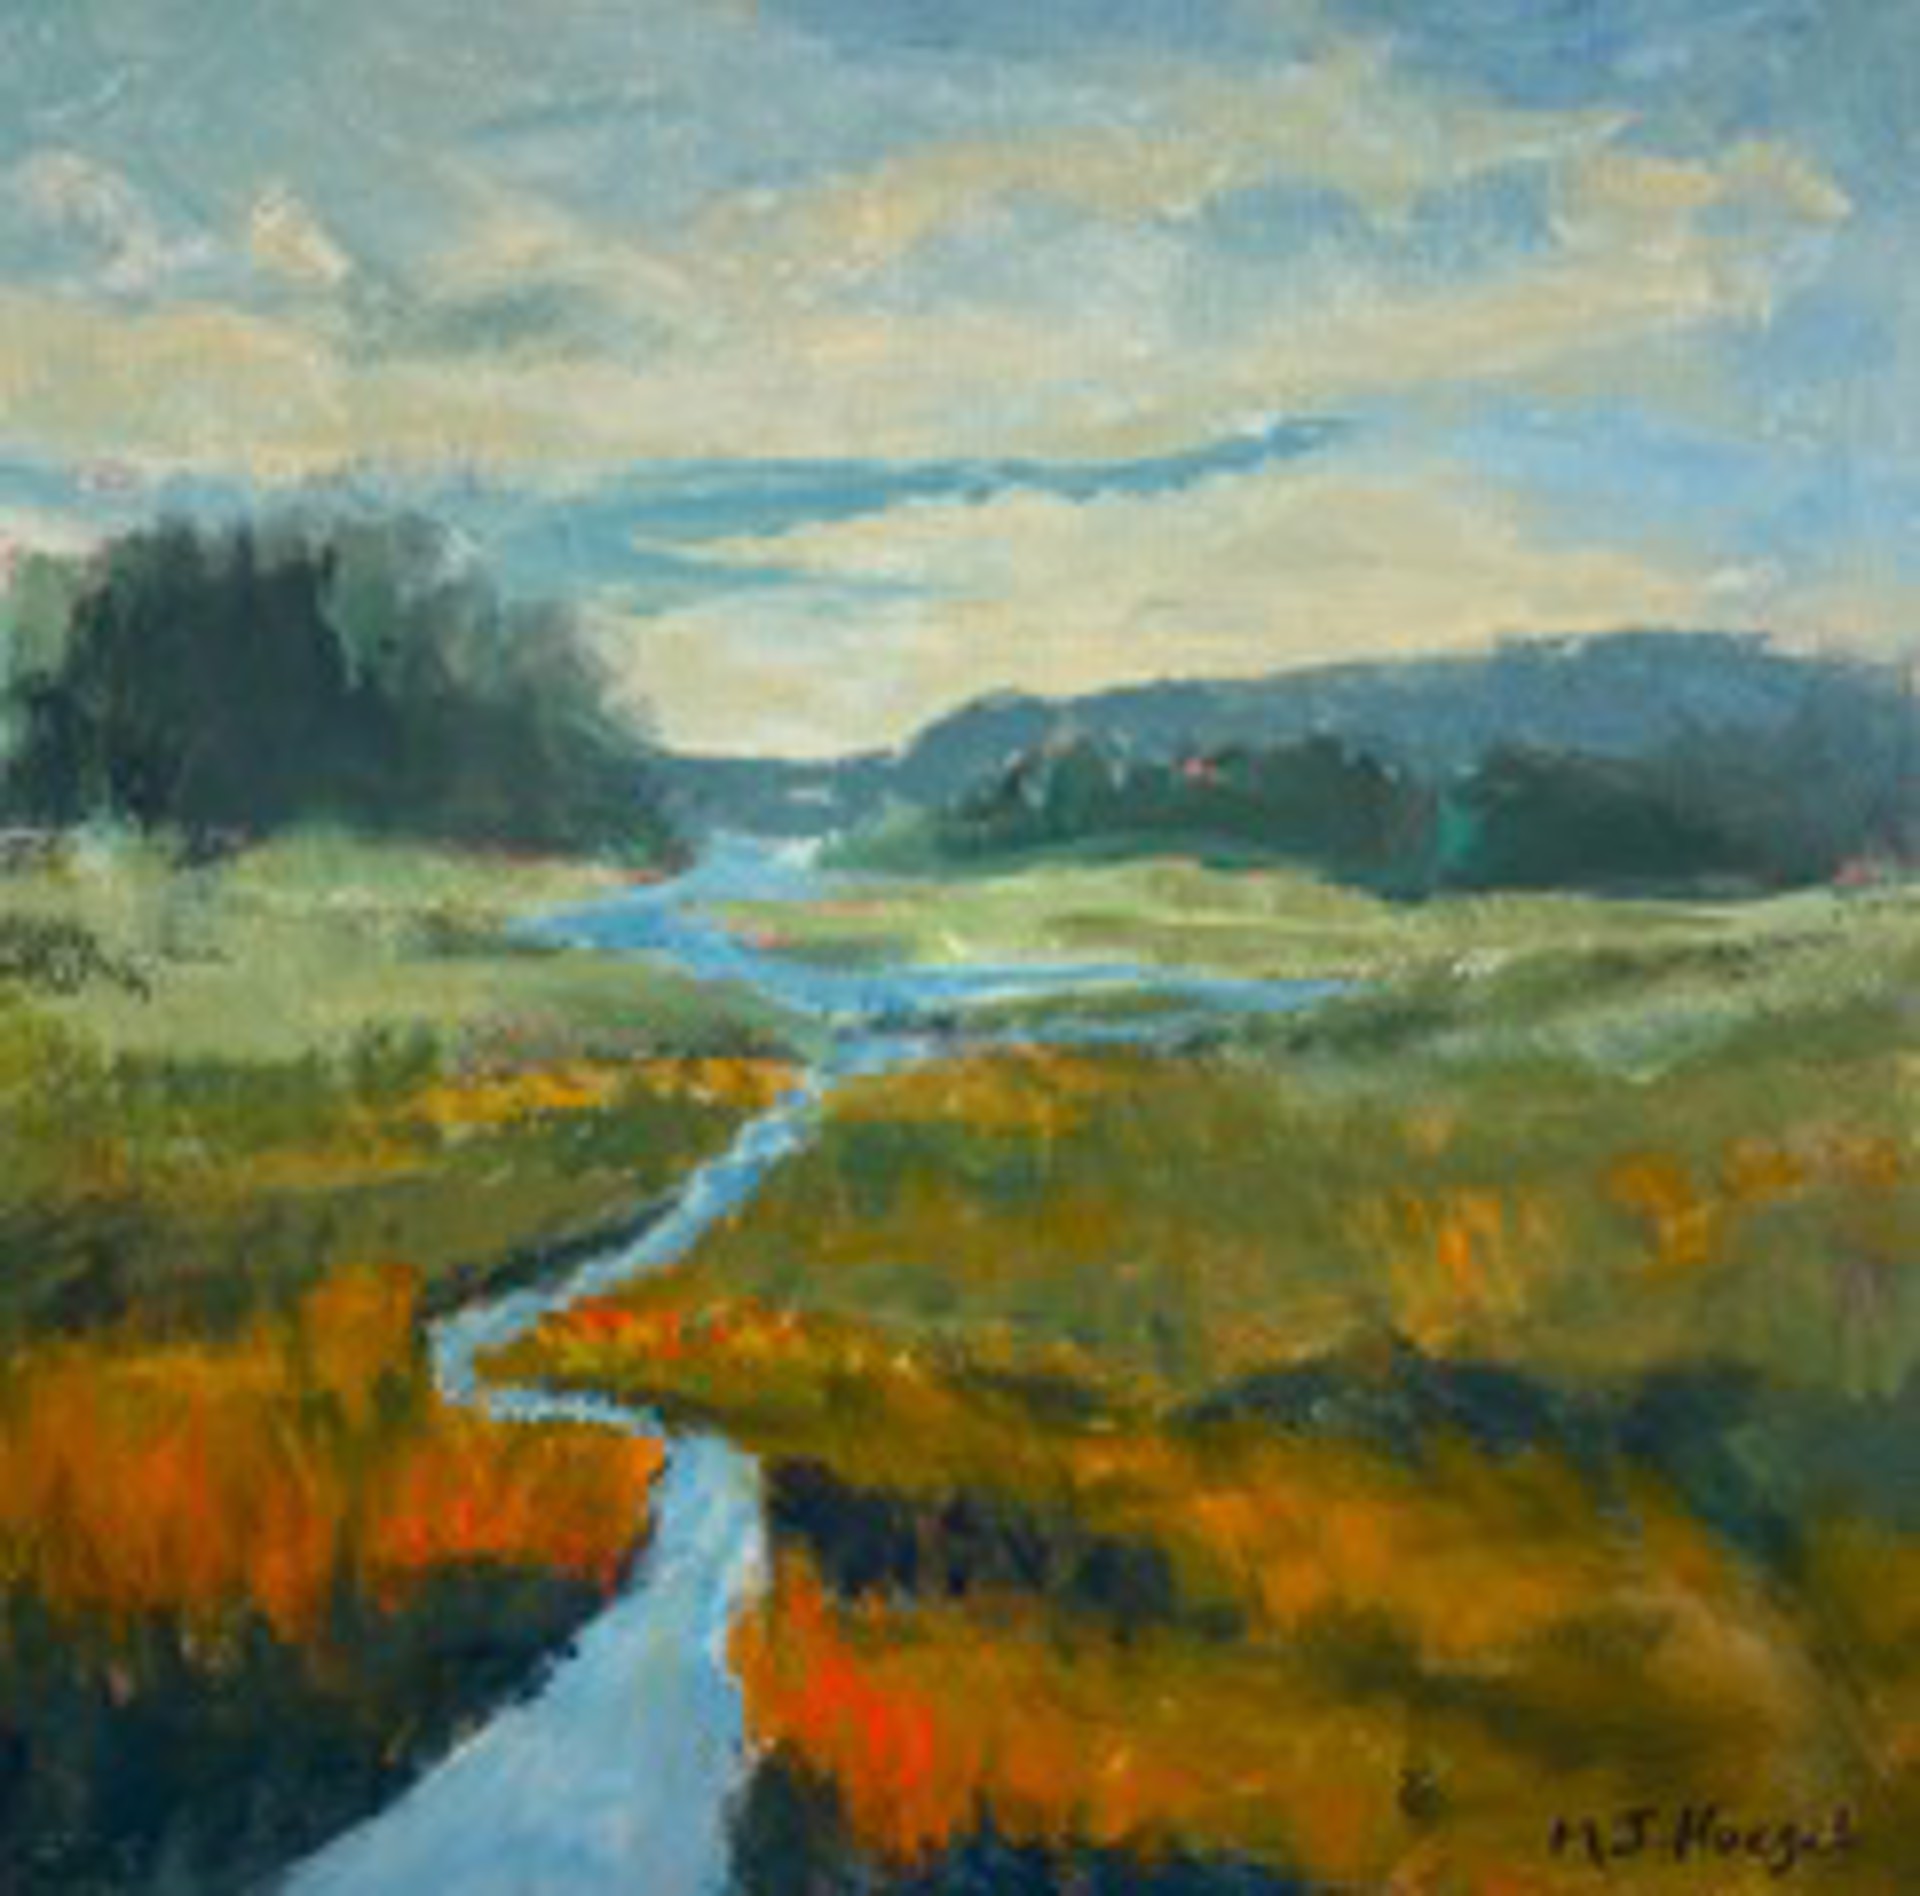 River to My Heart by Mary Jane Huegel